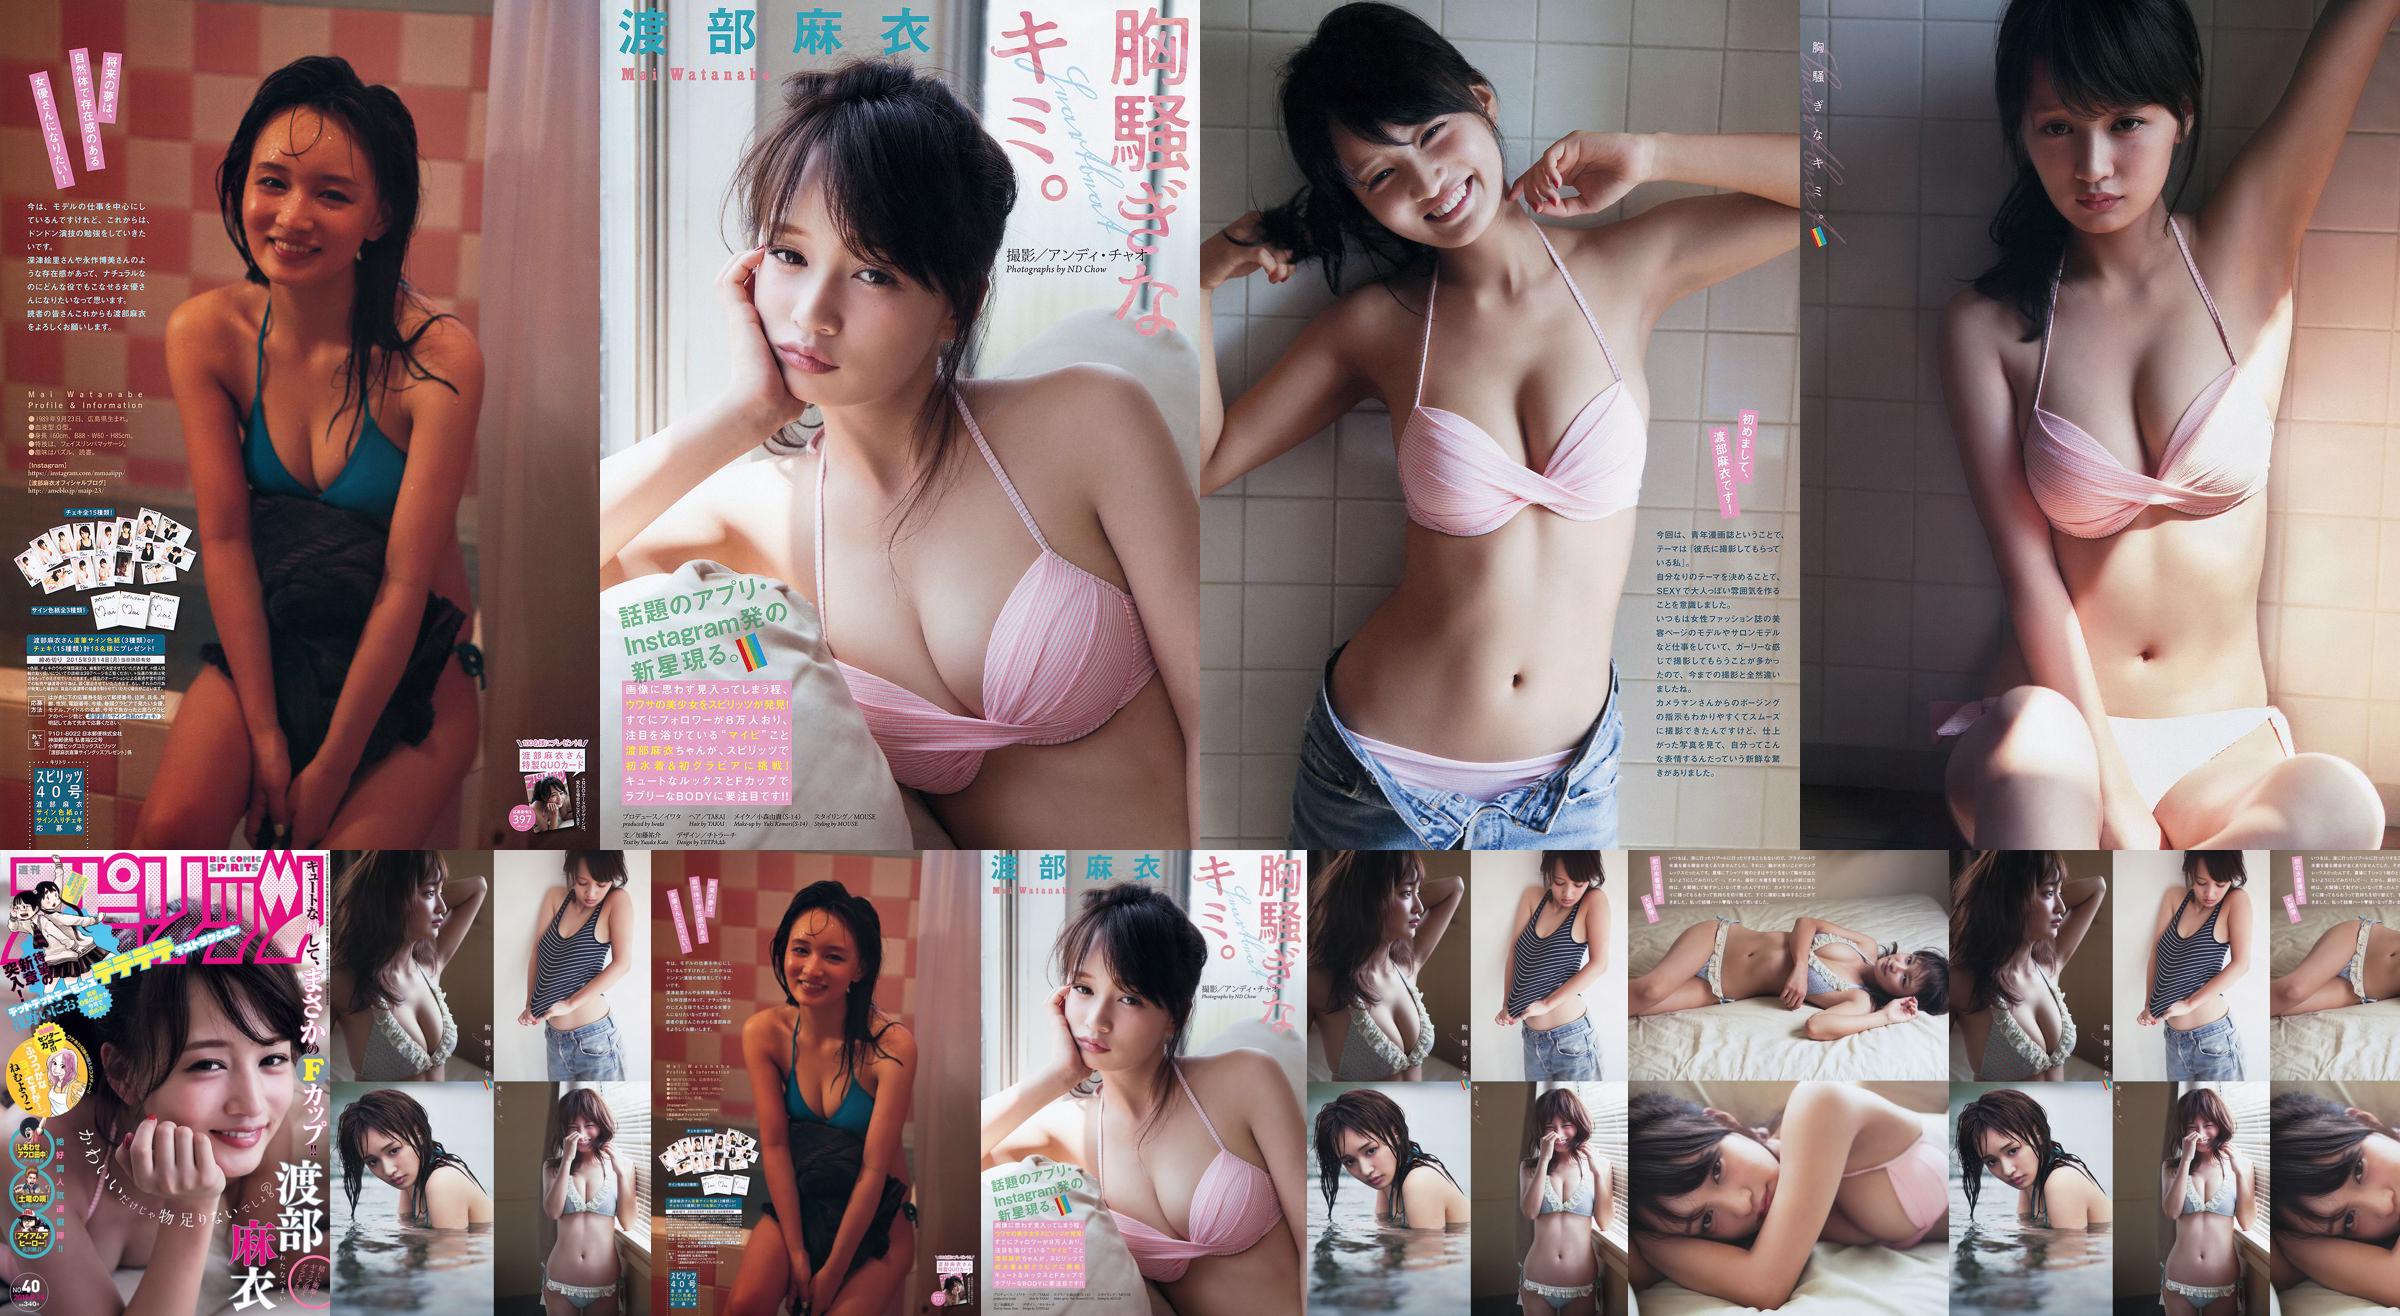 [Wöchentliche große Comic-Spirituosen] Watanabe Mai 2015 Nr. 40 Fotomagazin No.9514fb Seite 131